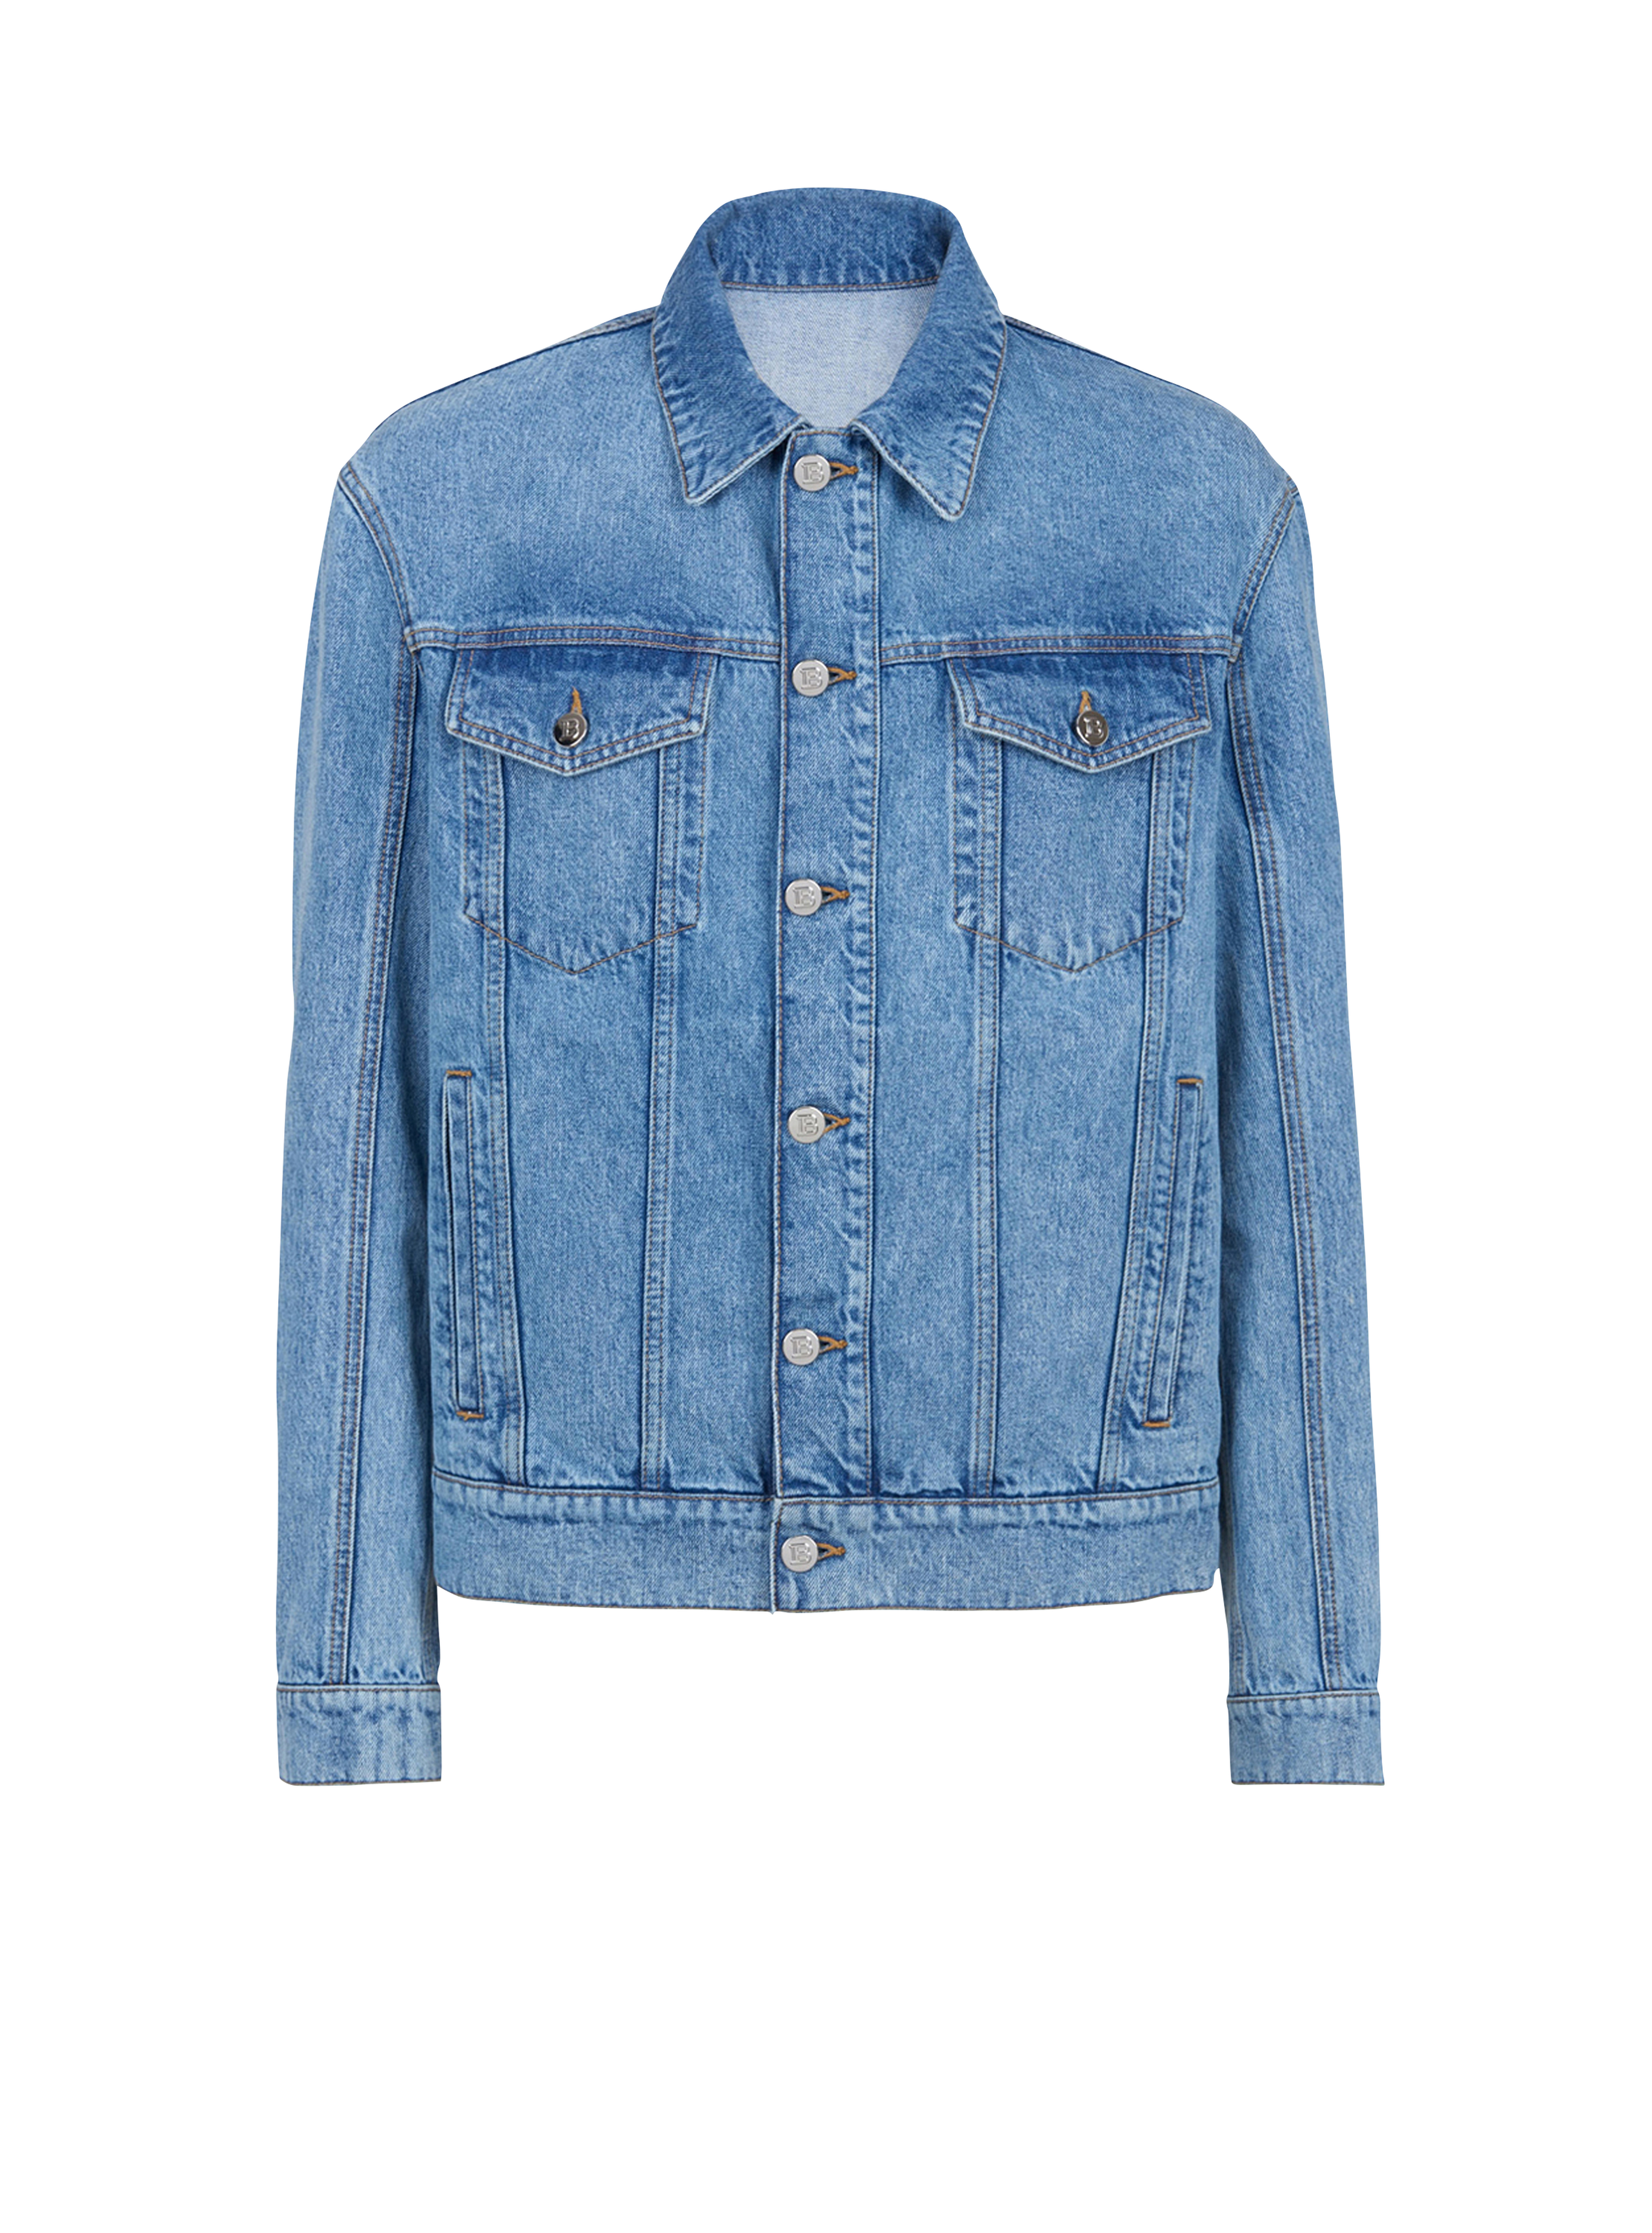 HIGH SUMMER CAPSULE -Denim jean jacket, blue